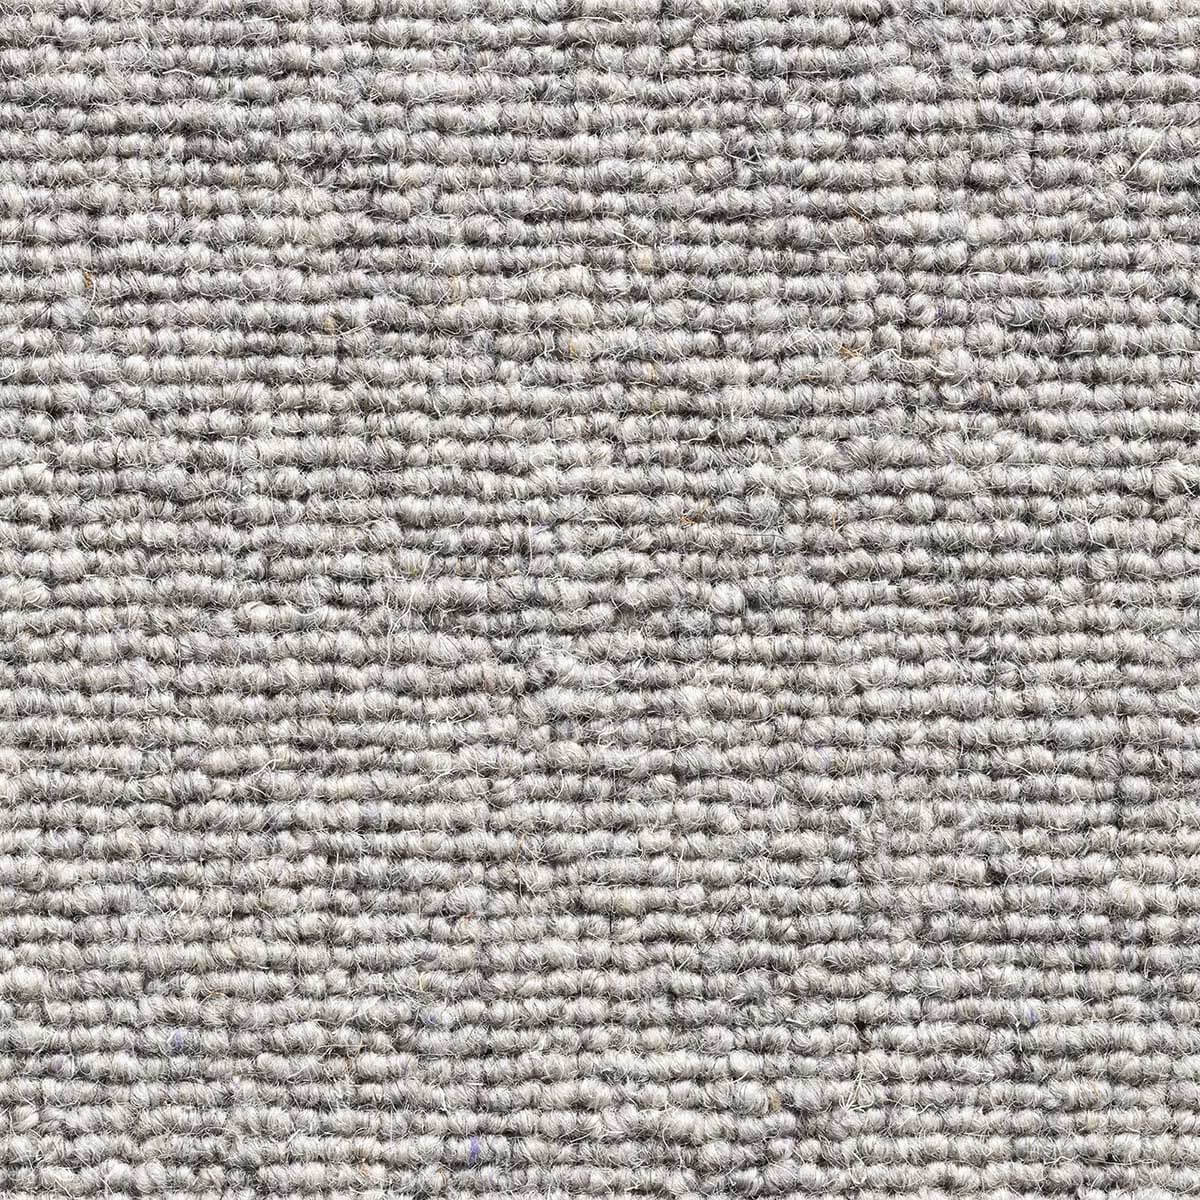 Glen Loop Wool Carpet - Tungsten 275